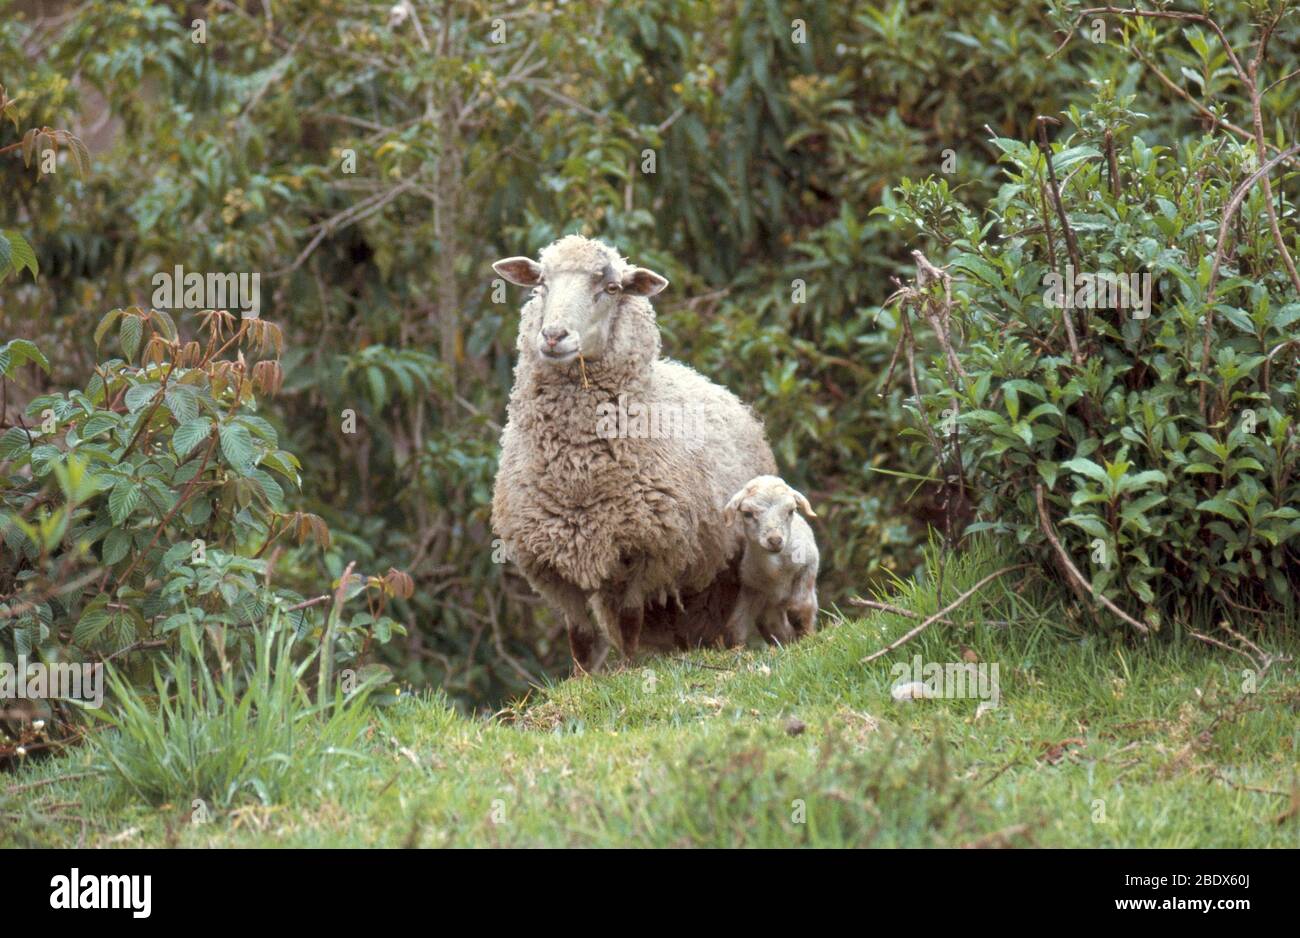 Sheep with lamb Stock Photo